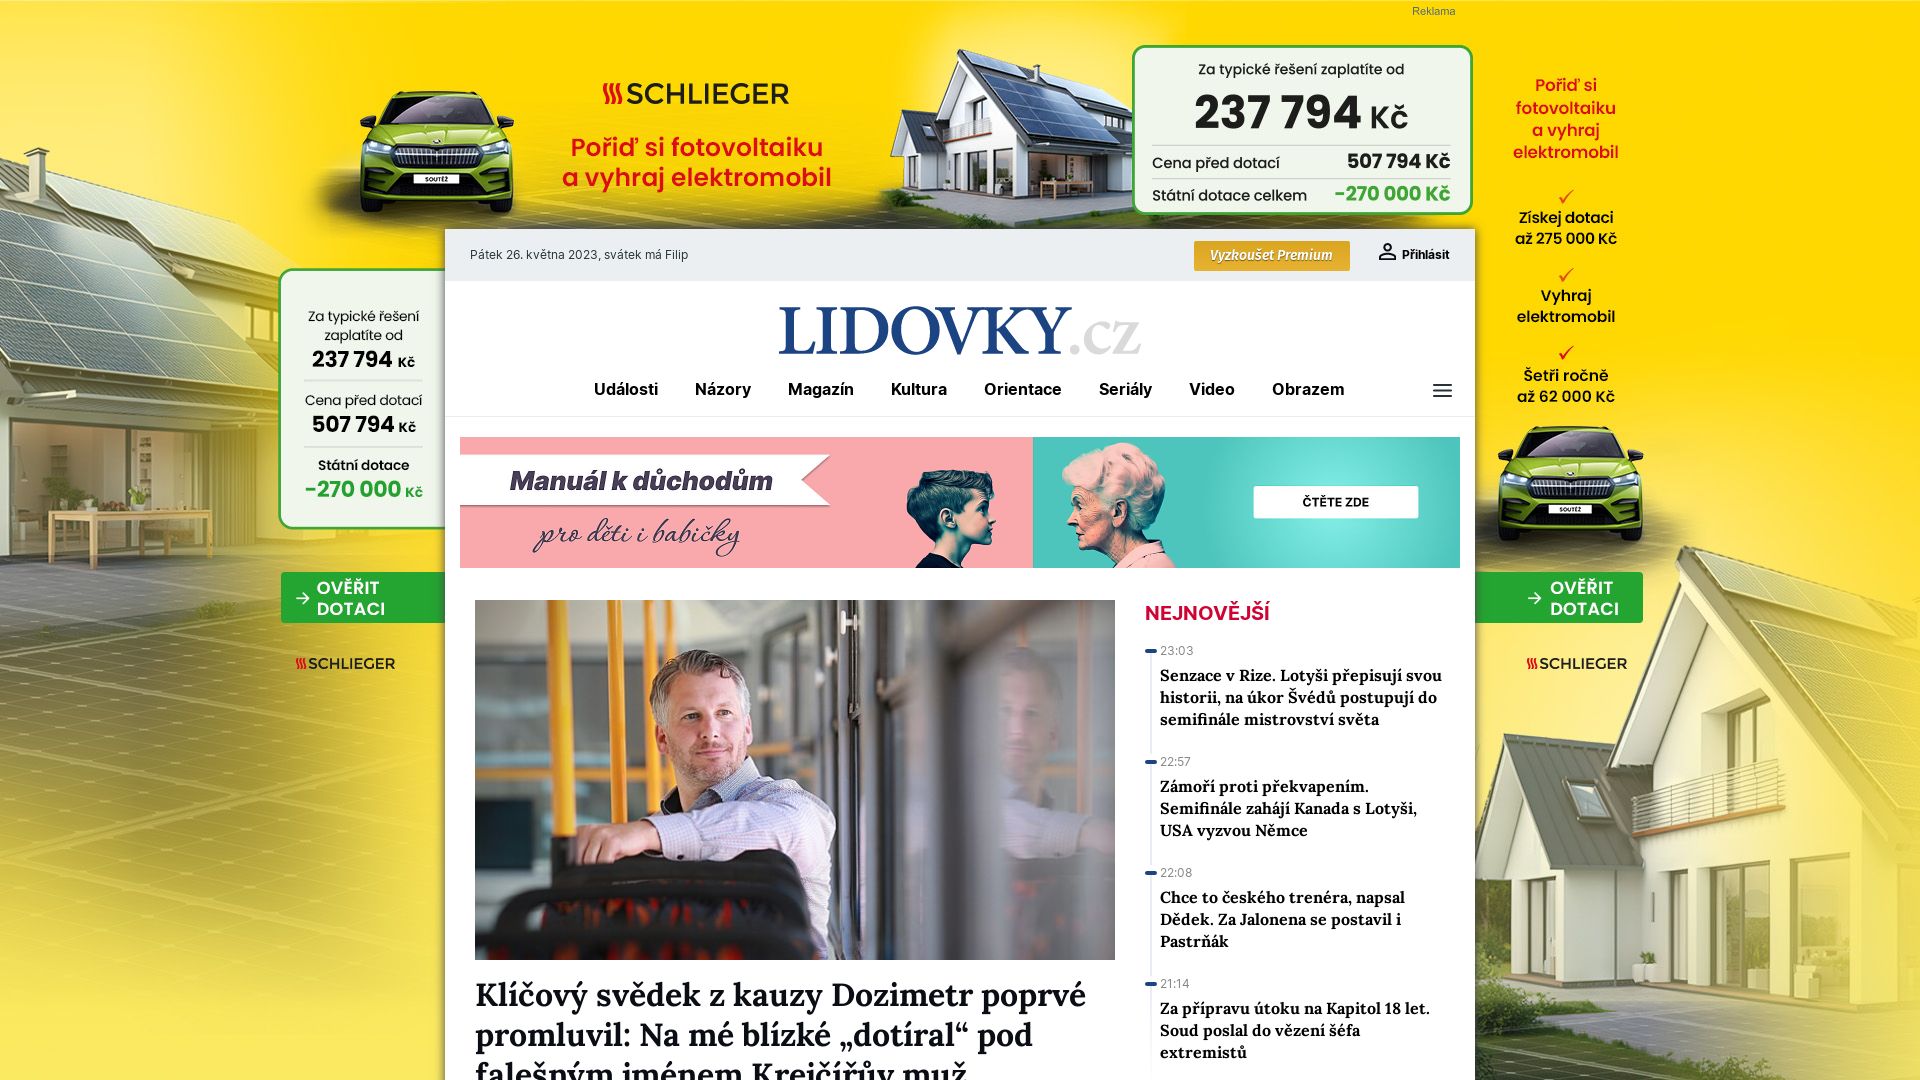 вебсайт lidovky.cz Є   ONLINE